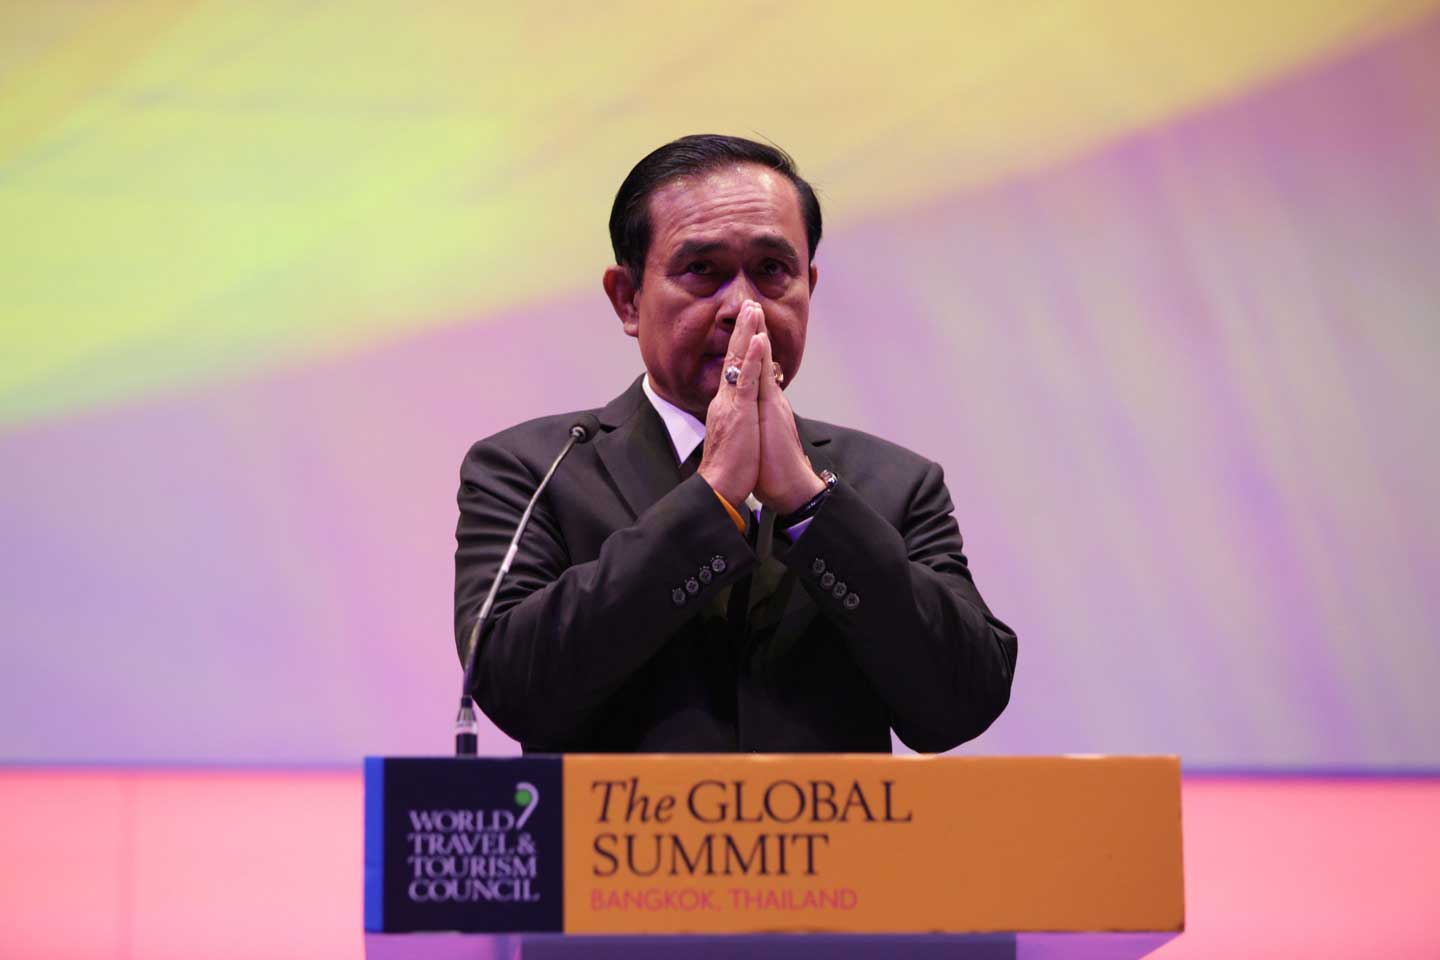 H.E. General Prayut Chan-o-cha, Prime Minister, Kingdom of Thailand